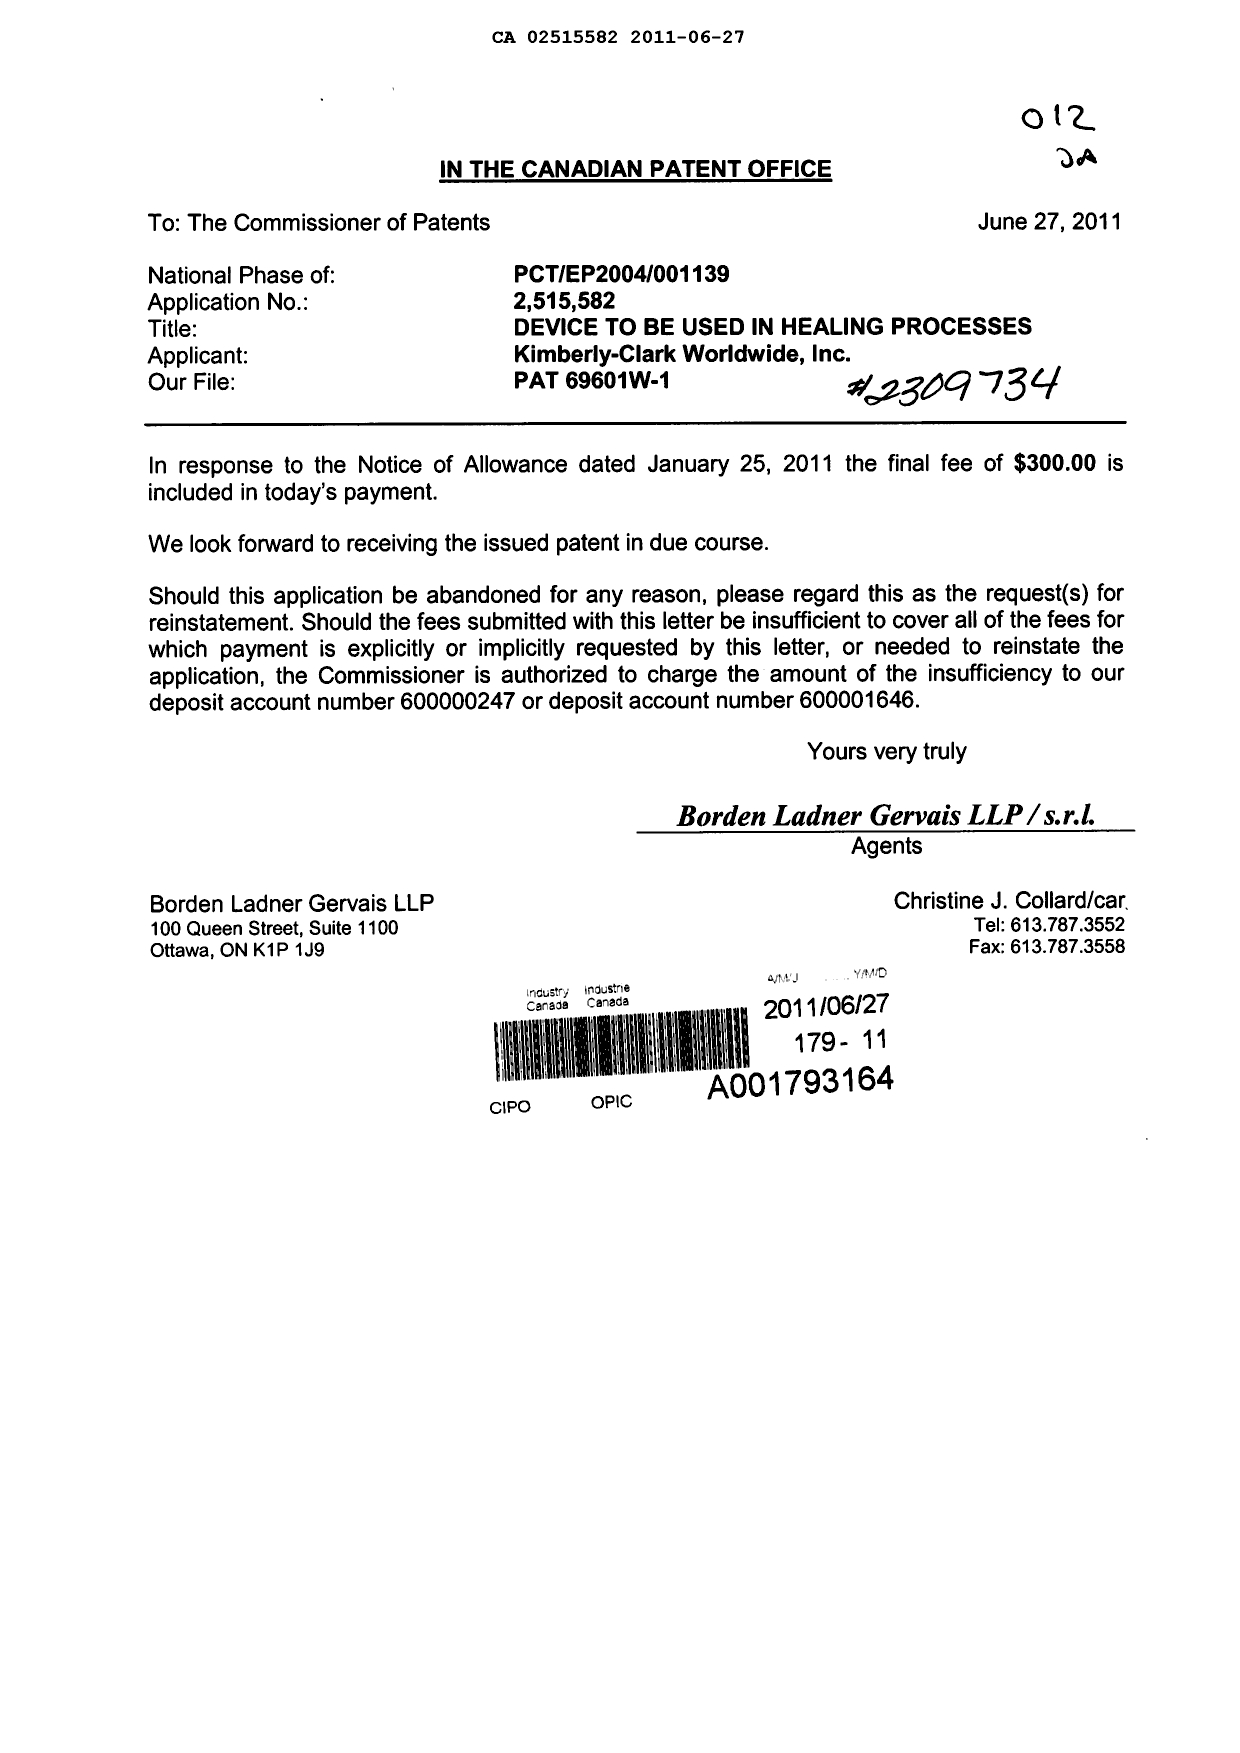 Canadian Patent Document 2515582. Correspondence 20101227. Image 1 of 1